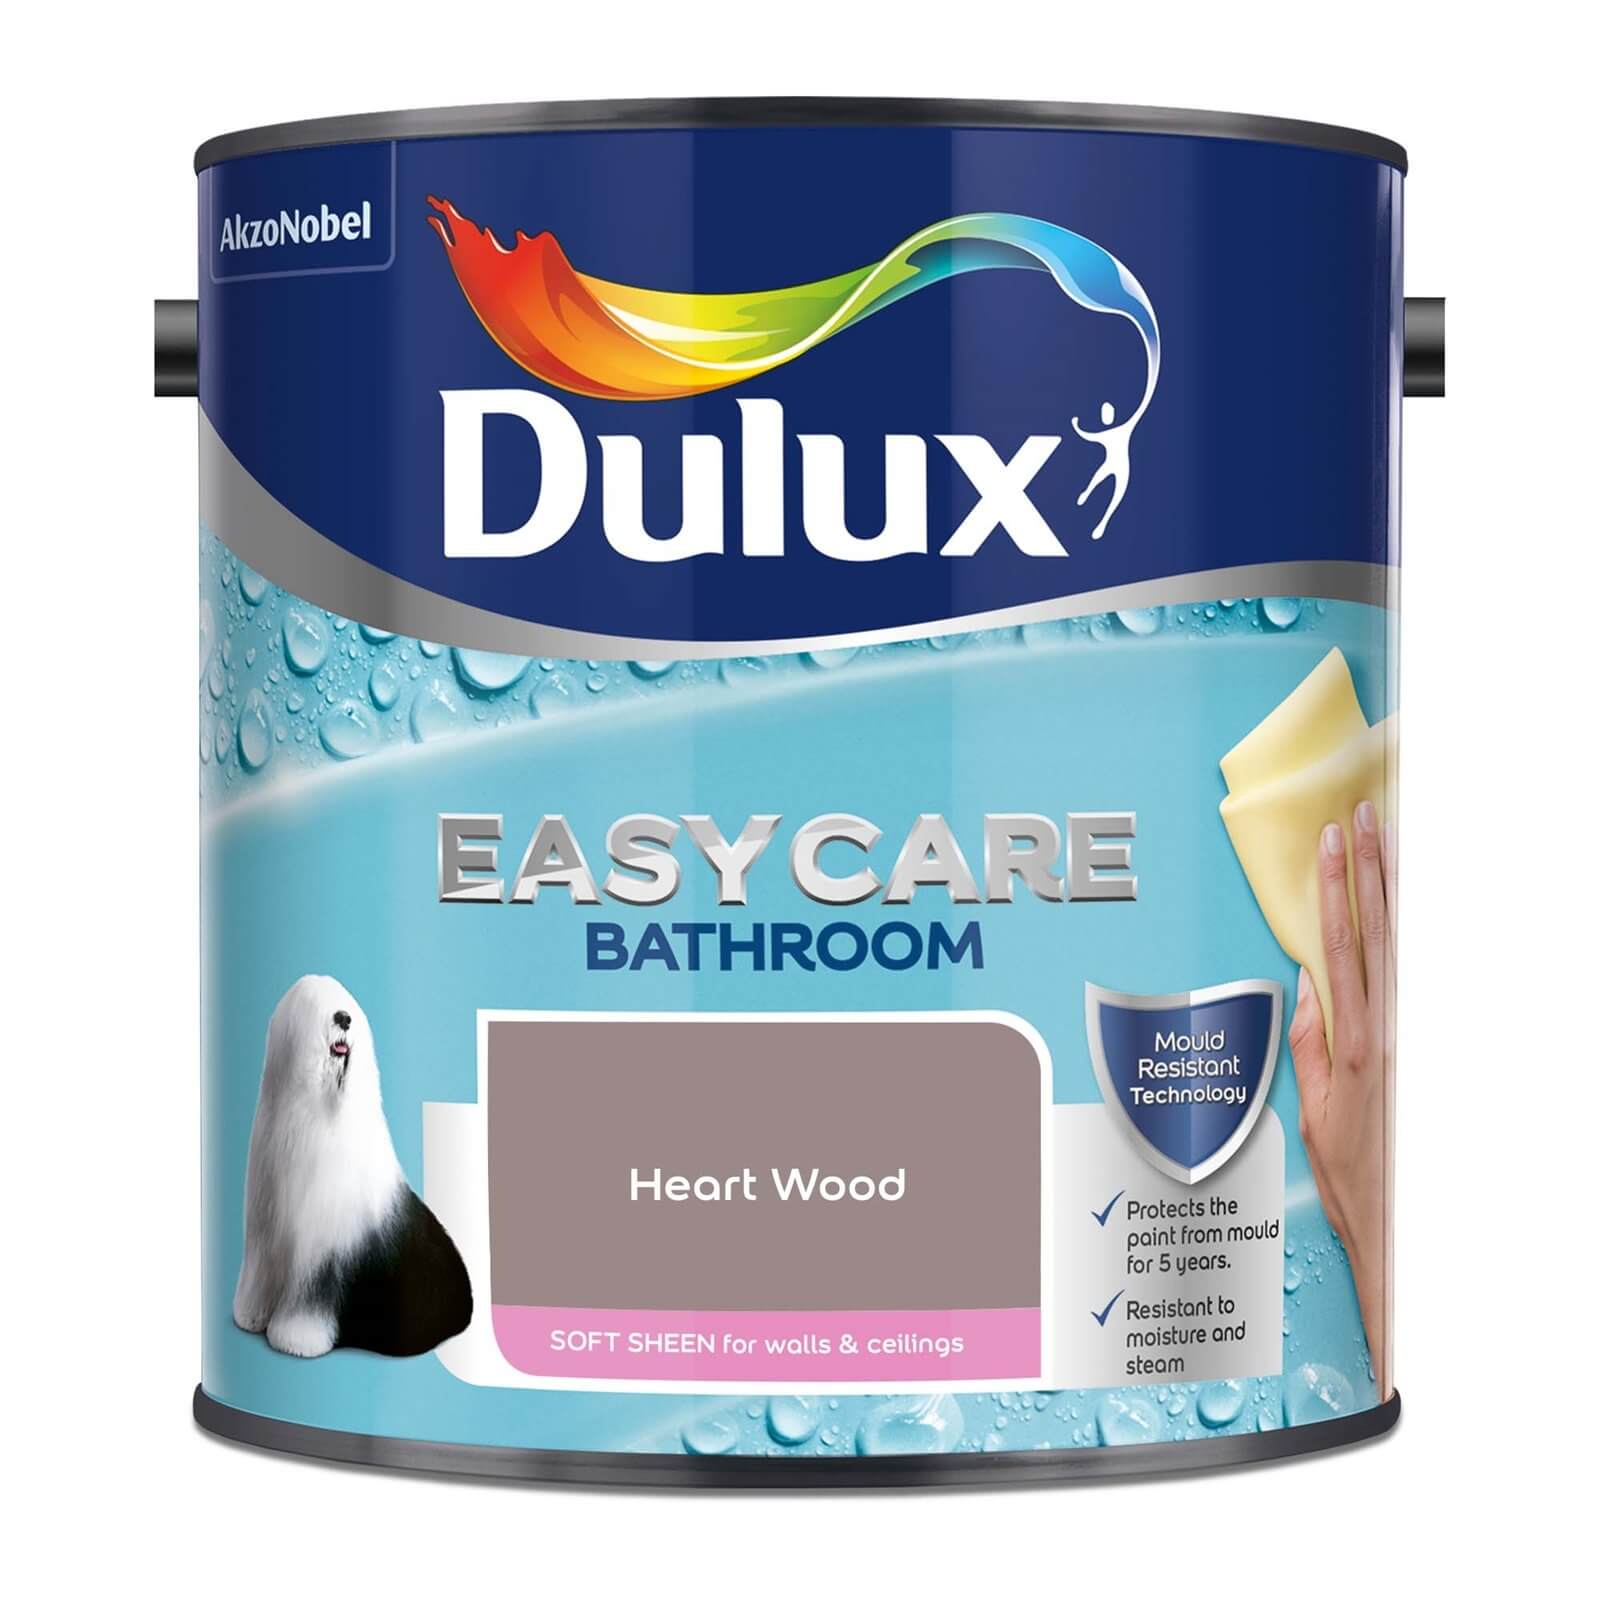 Dulux Easycare Bathroom Heart Wood Soft Sheen Paint - 2.5L